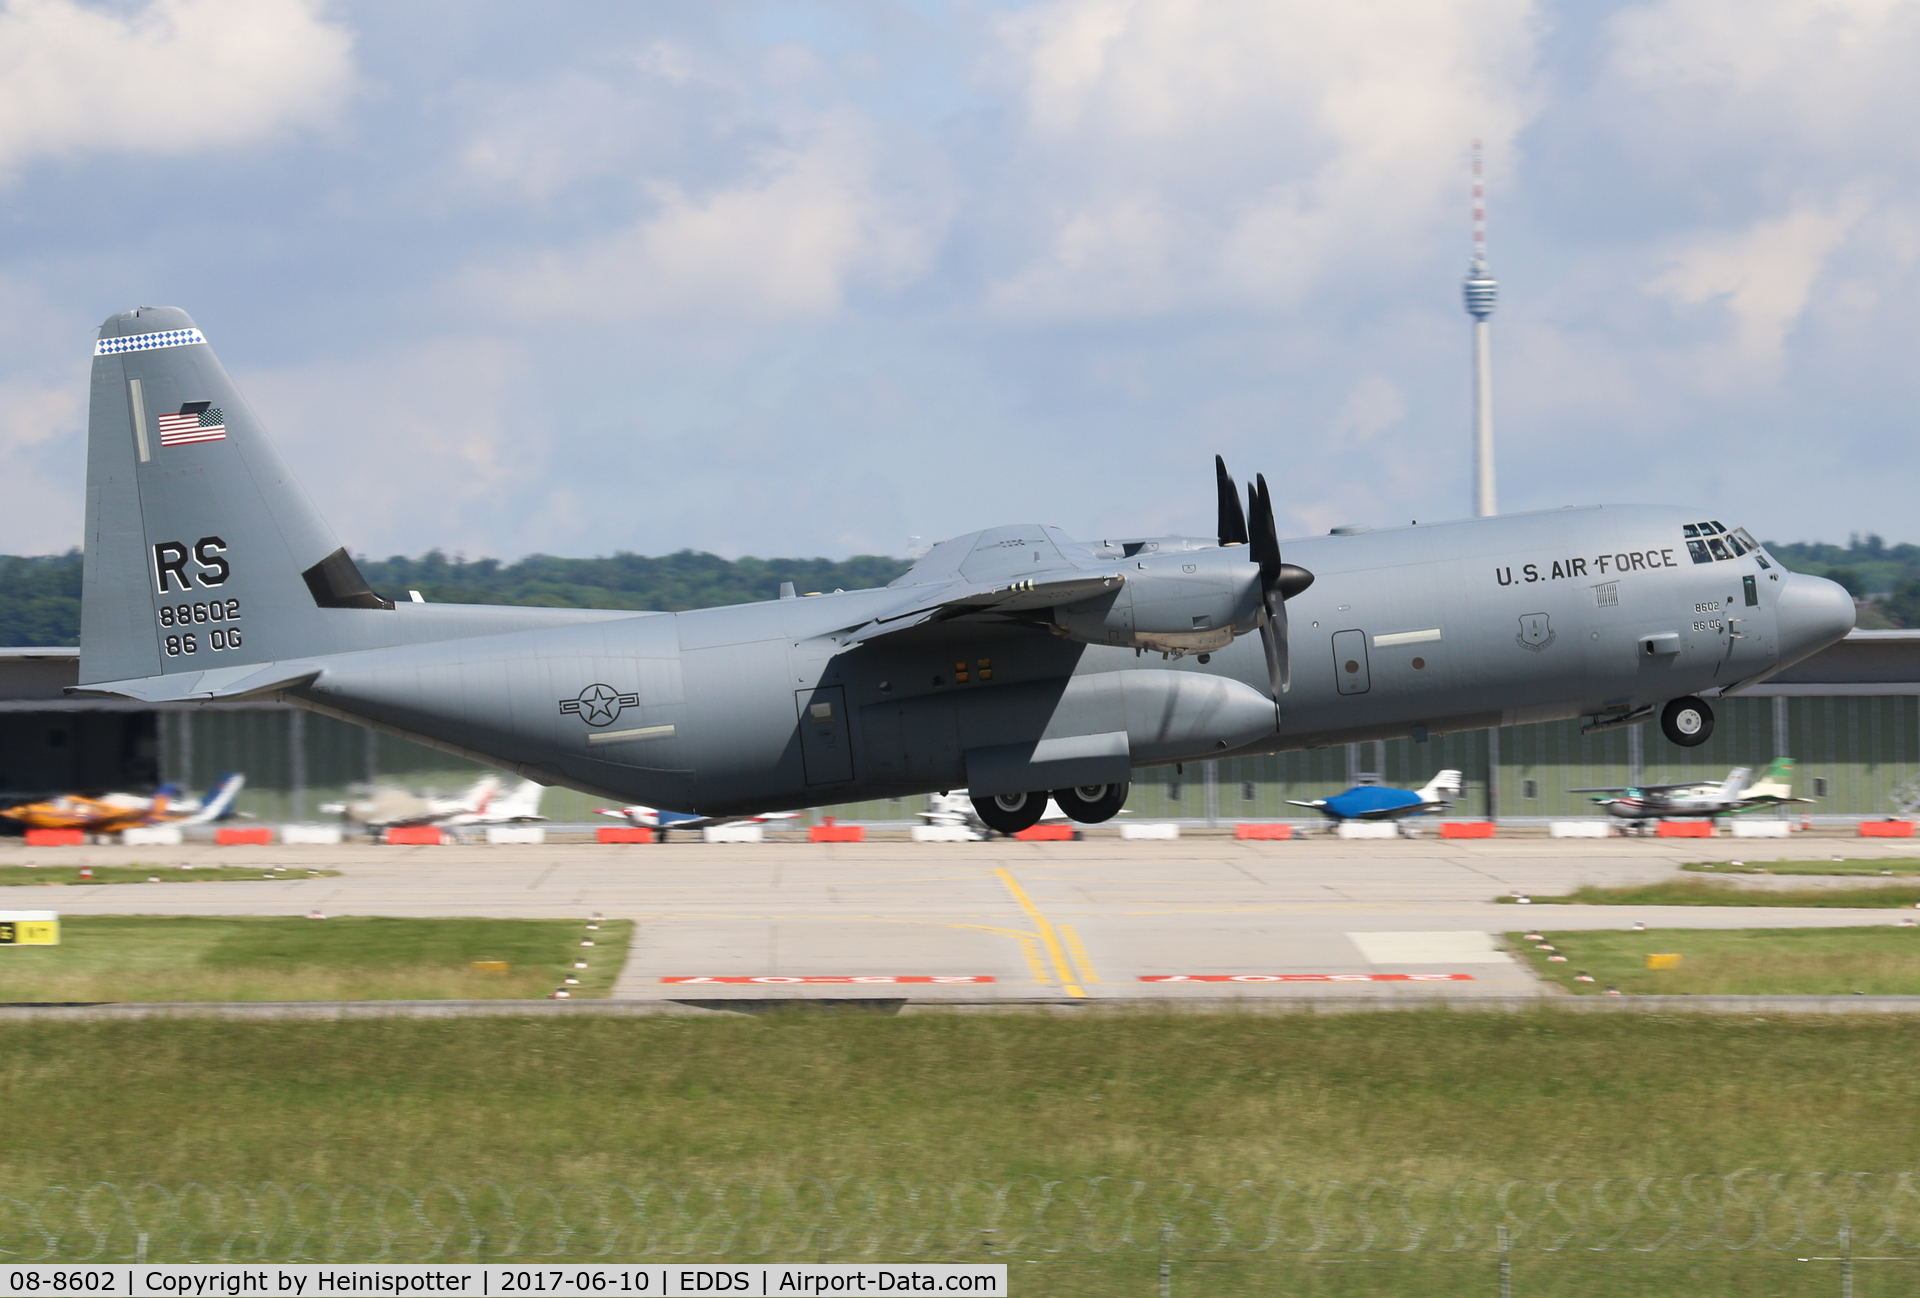 08-8602, 2008 Lockheed Martin C-130J-30 Super Hercules C/N 382-5611, 08-8602 at Stuttgart Airport.